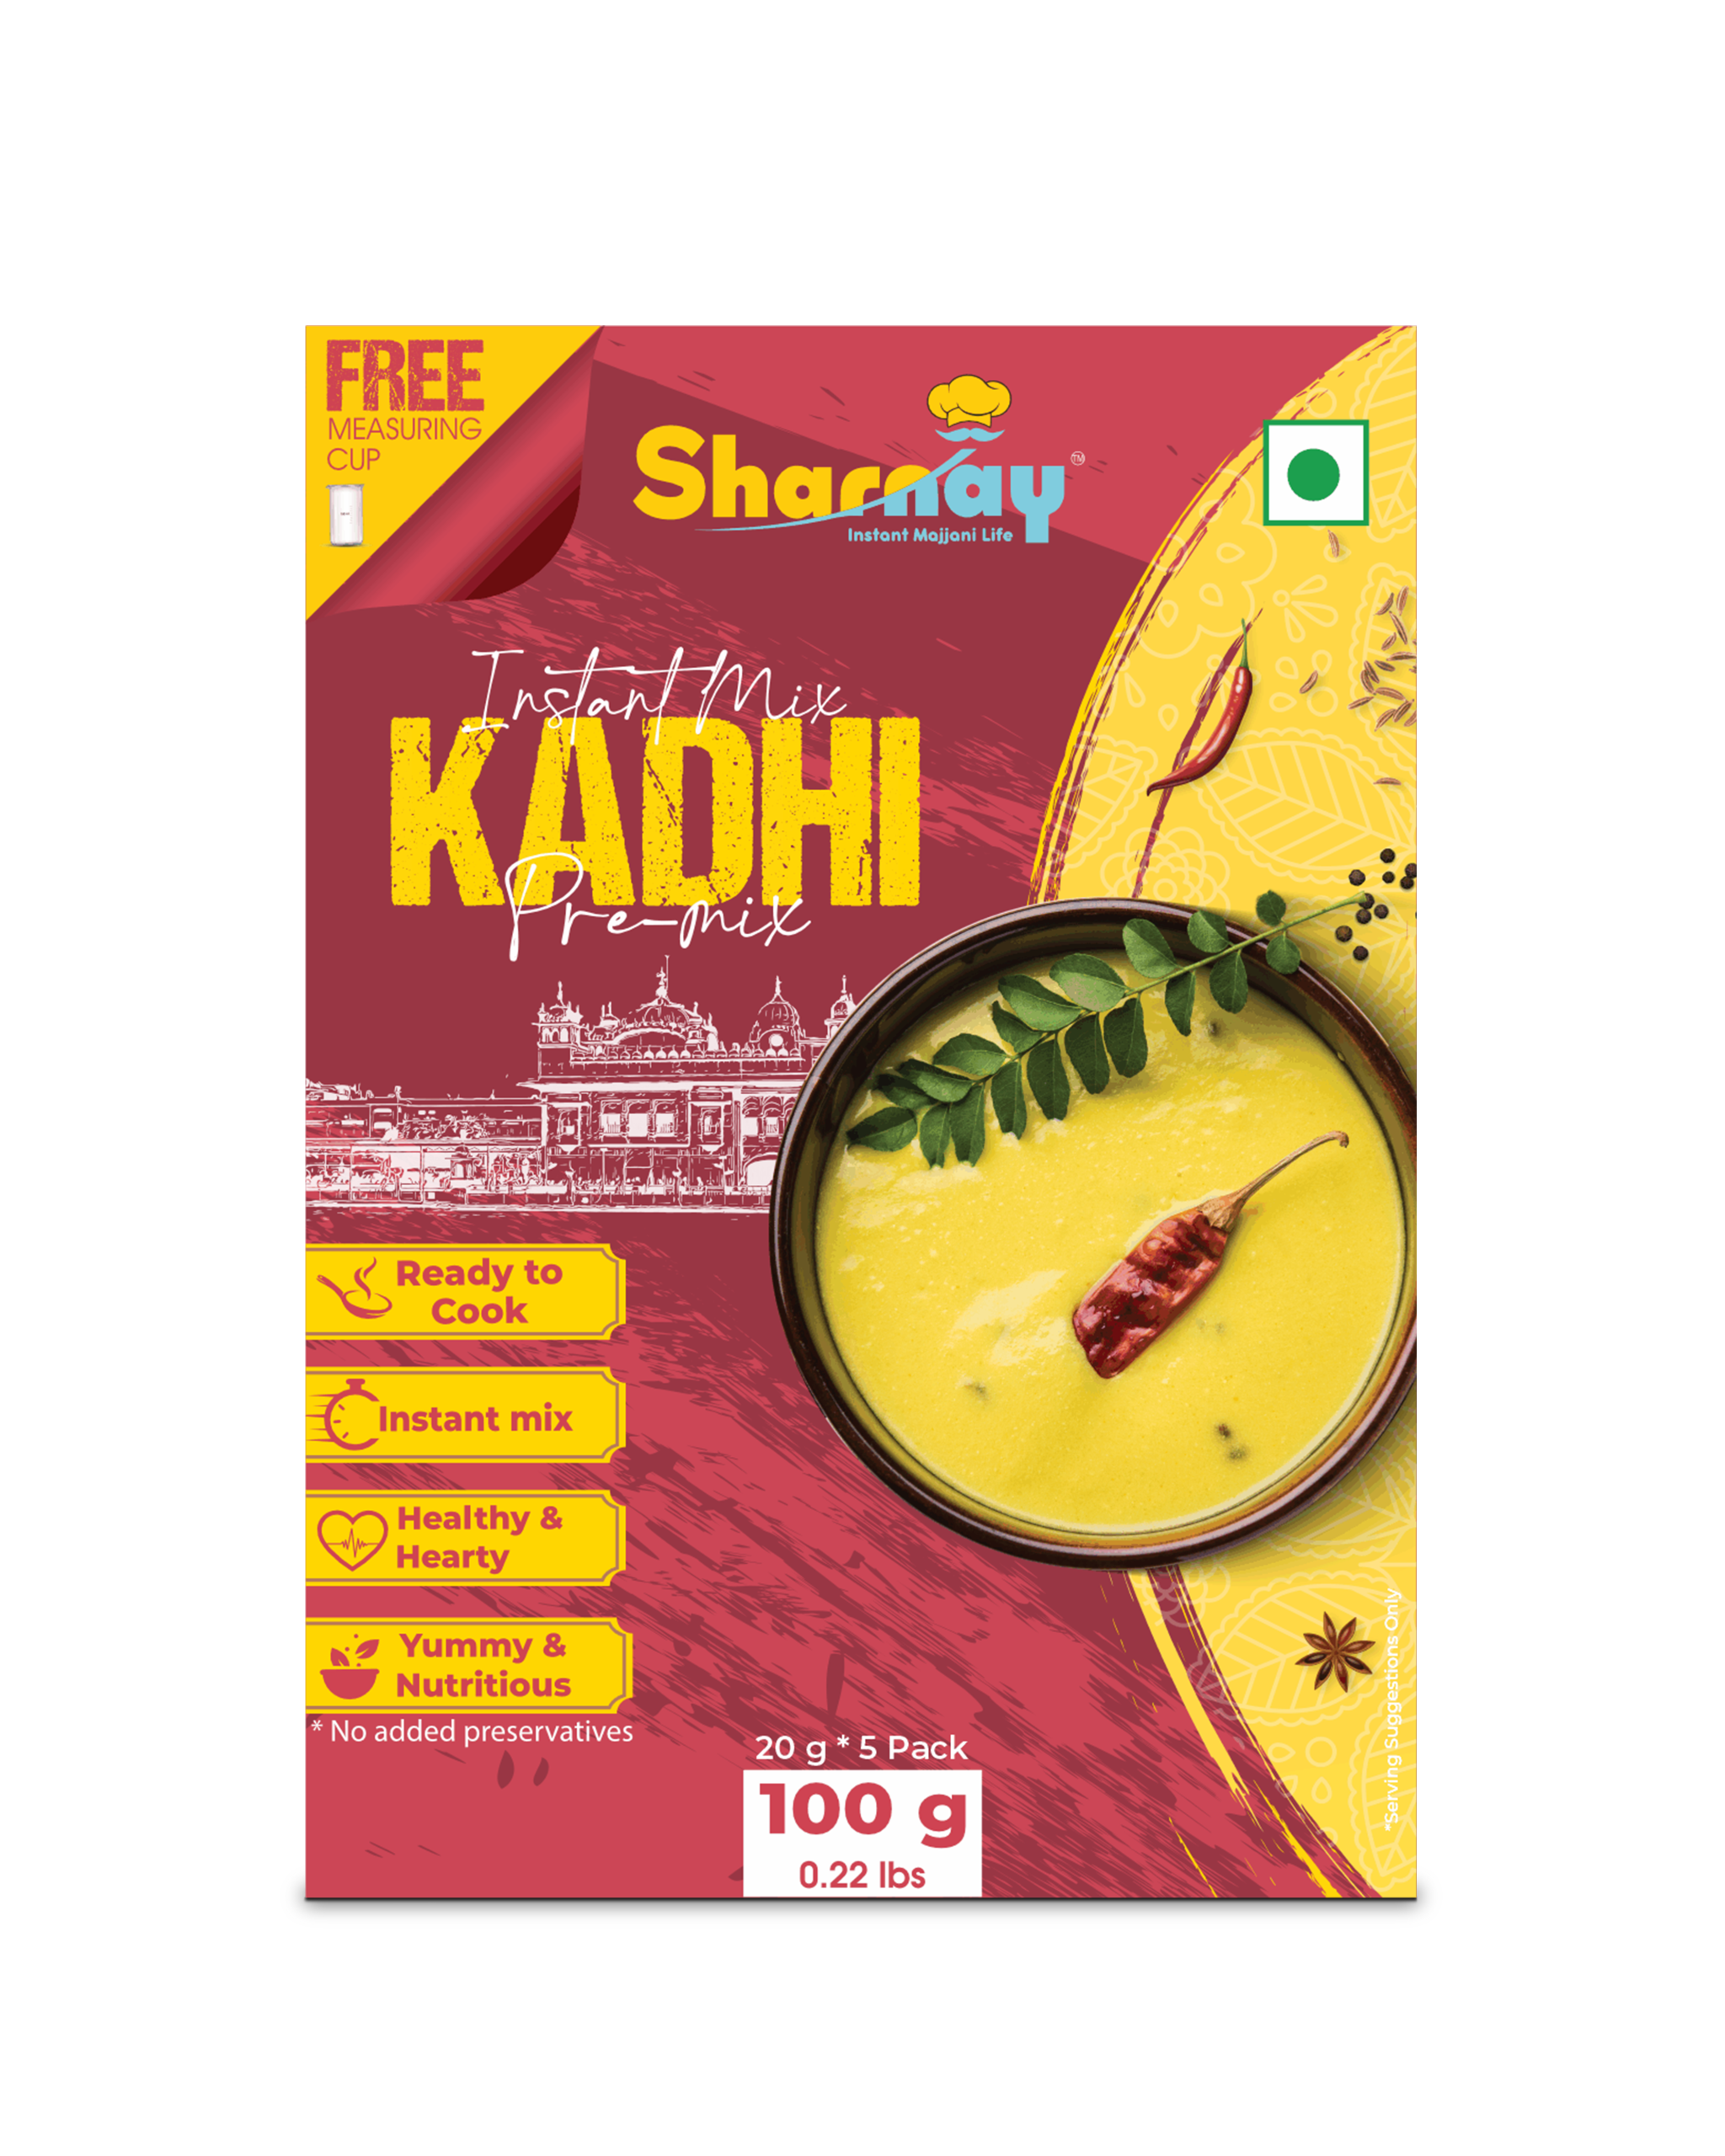 Product: Sharnay Instant Kadhi Premix